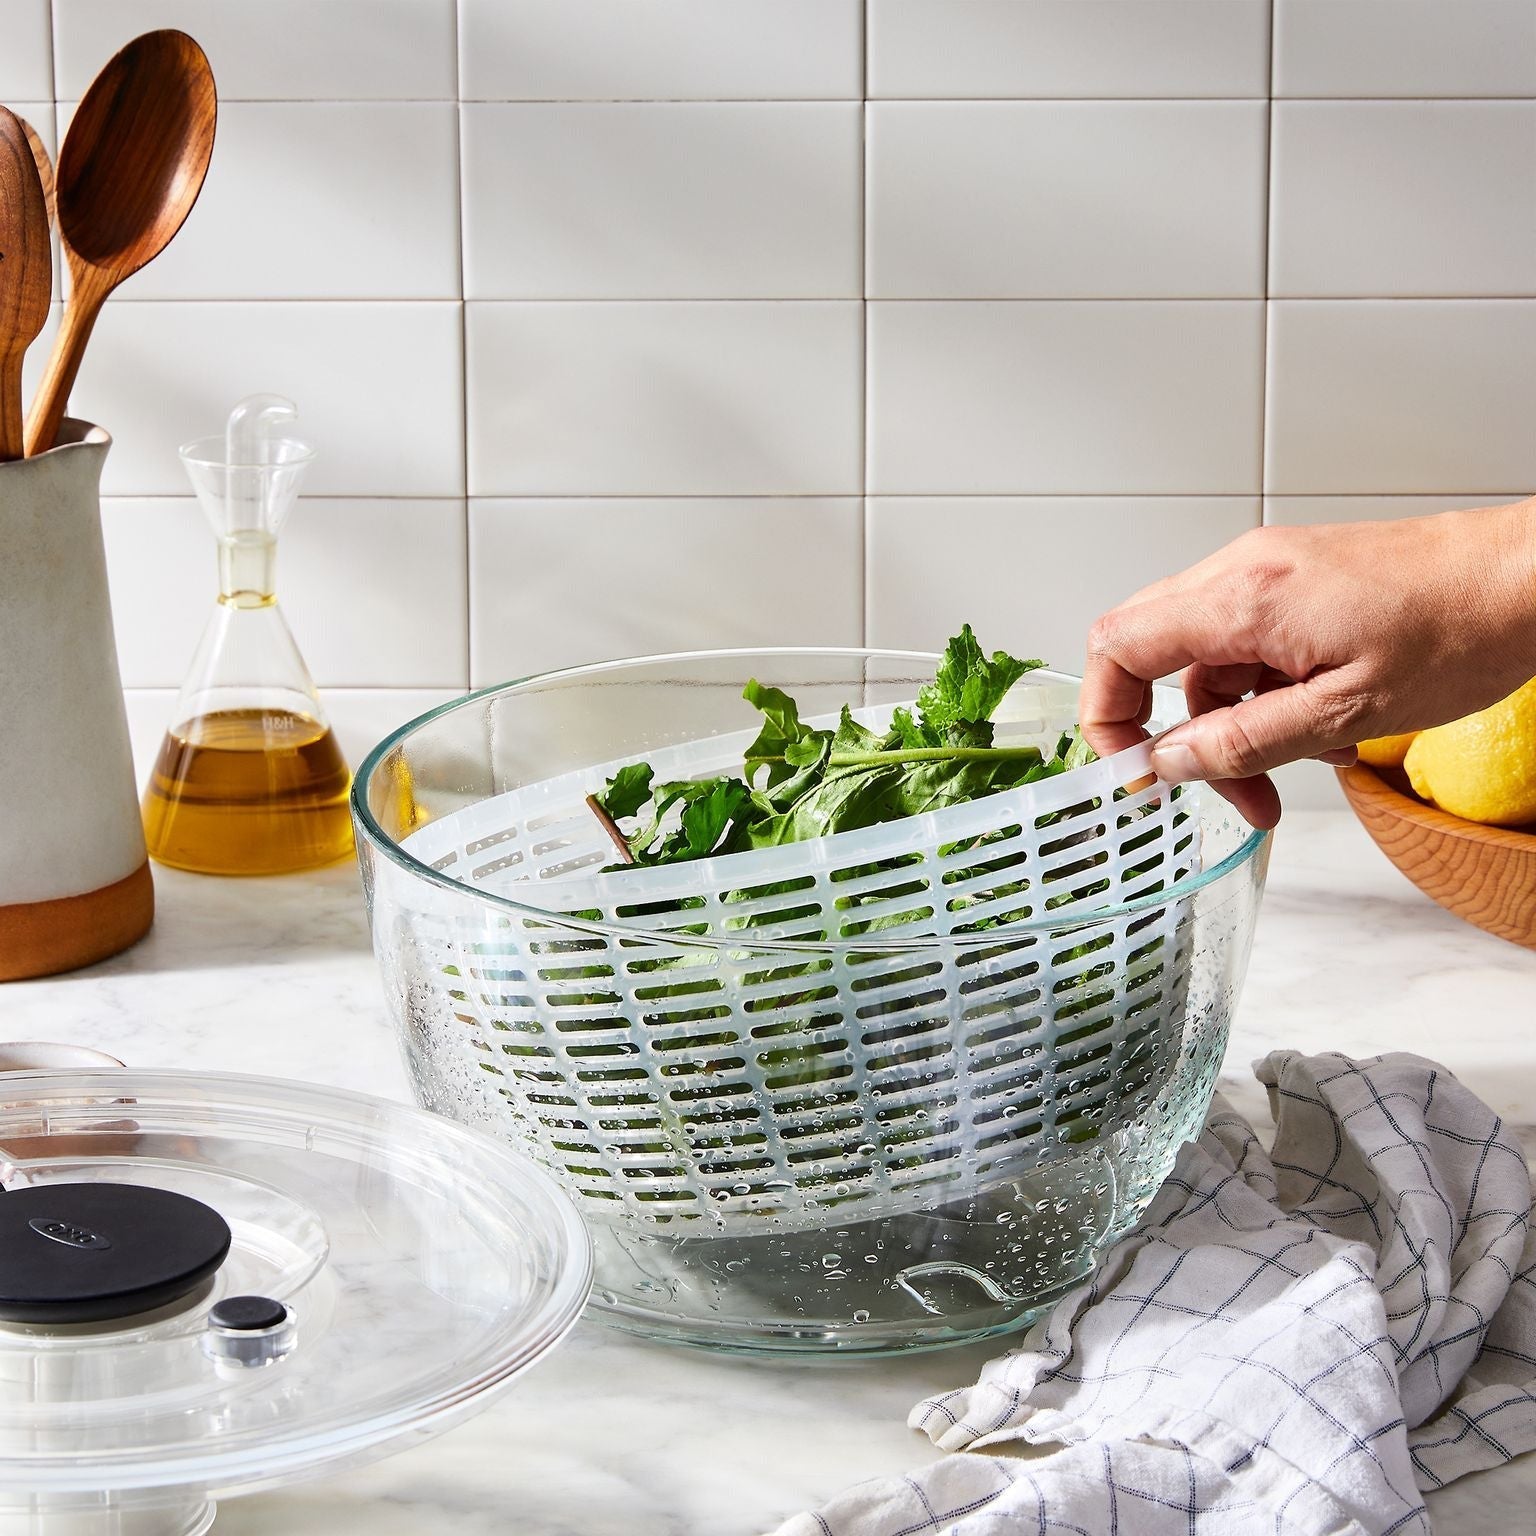 Zyliss Swift Dry Large Salad Spinner - BPA Free Lettuce & Vegetable Spinner  - Lettuce Spinner with Aqua Vent Ridged Basket - Works as Large Salad Bowl